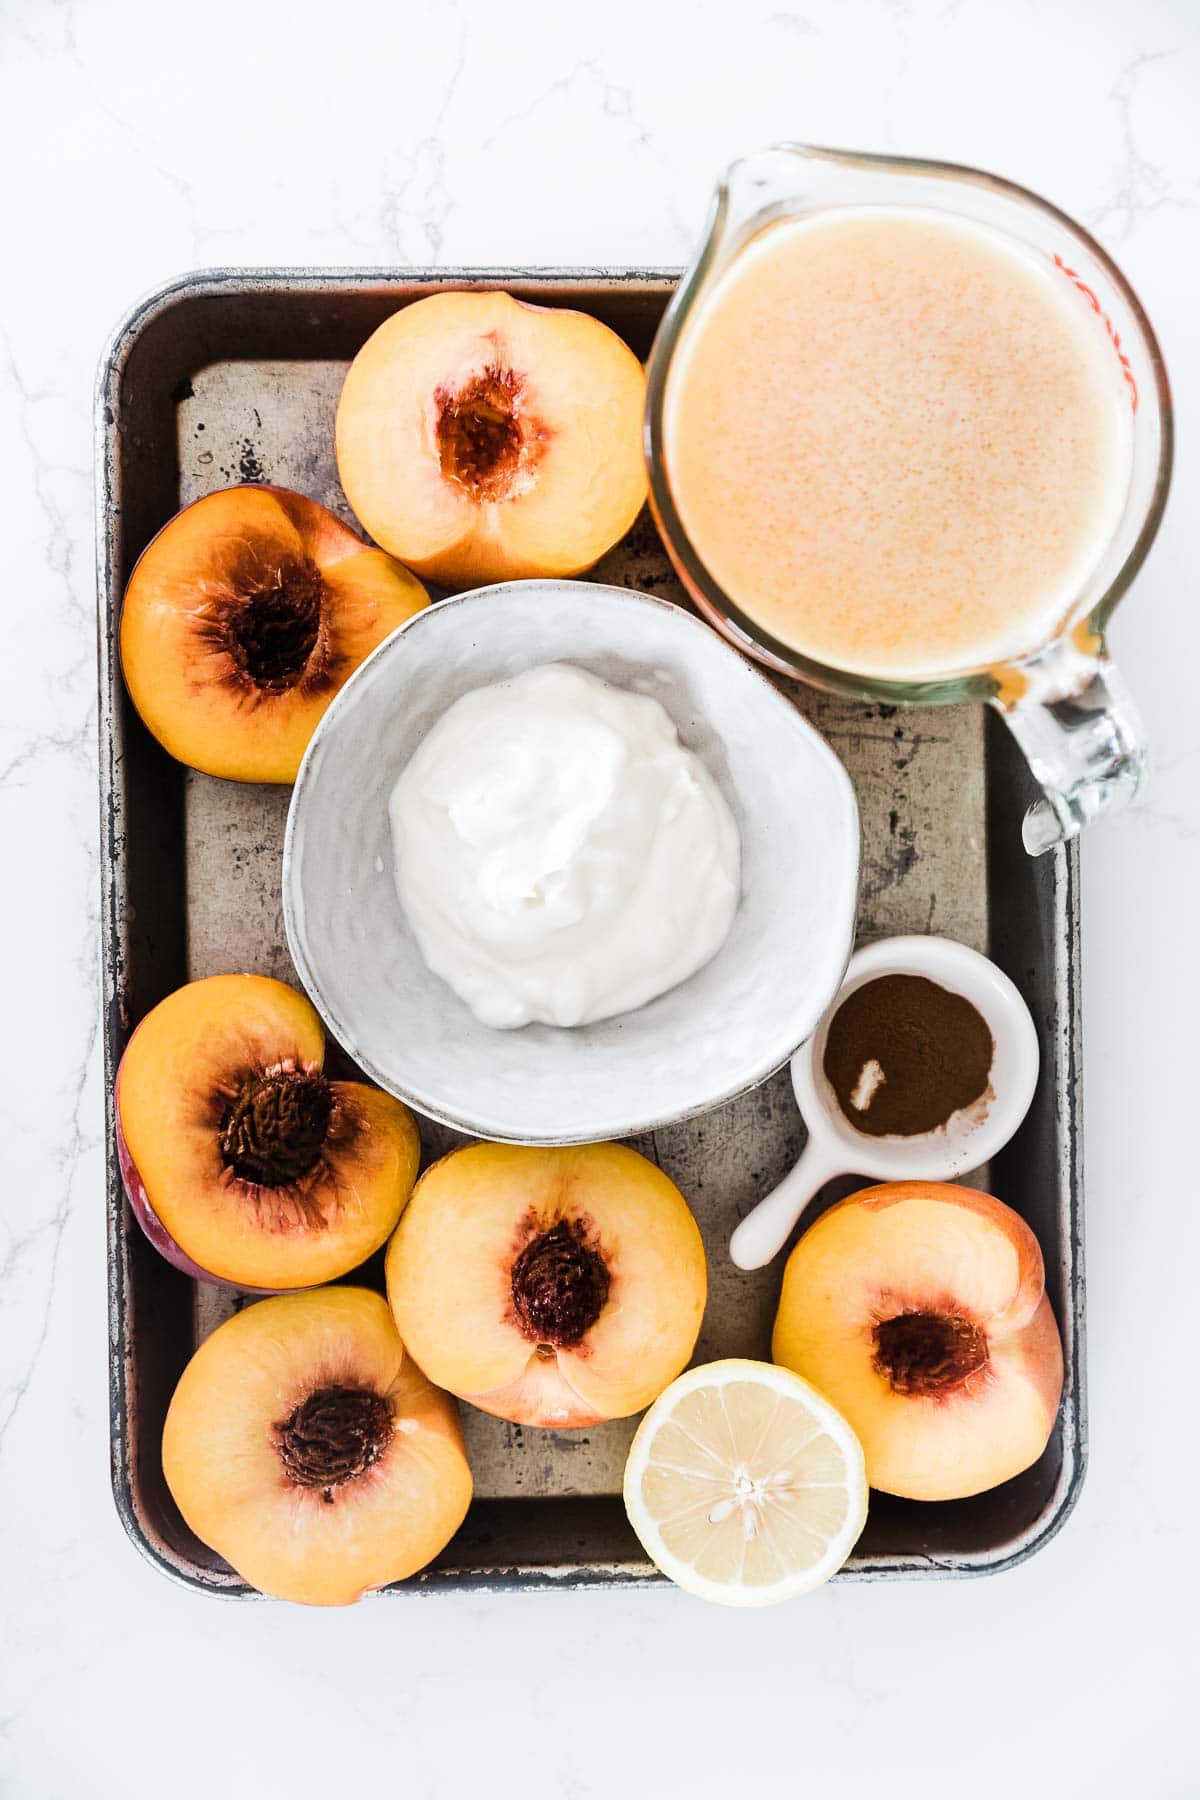 Peaches, mango nectar and yogurt on a metal baking tray.